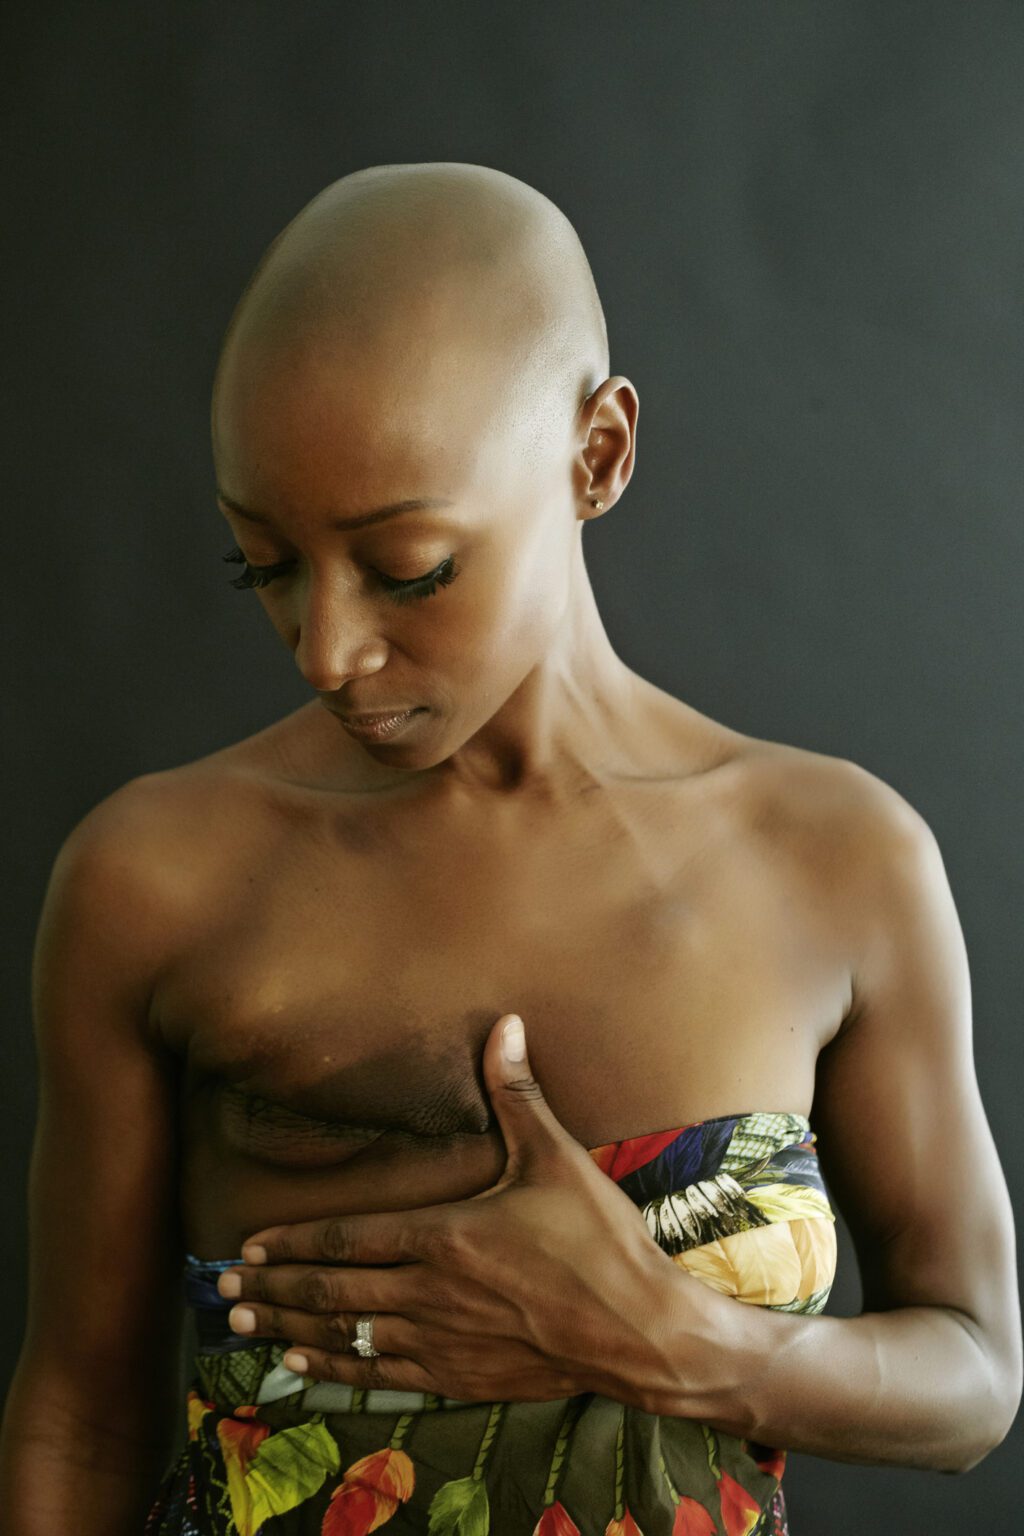 Black woman with a mastectomy scar